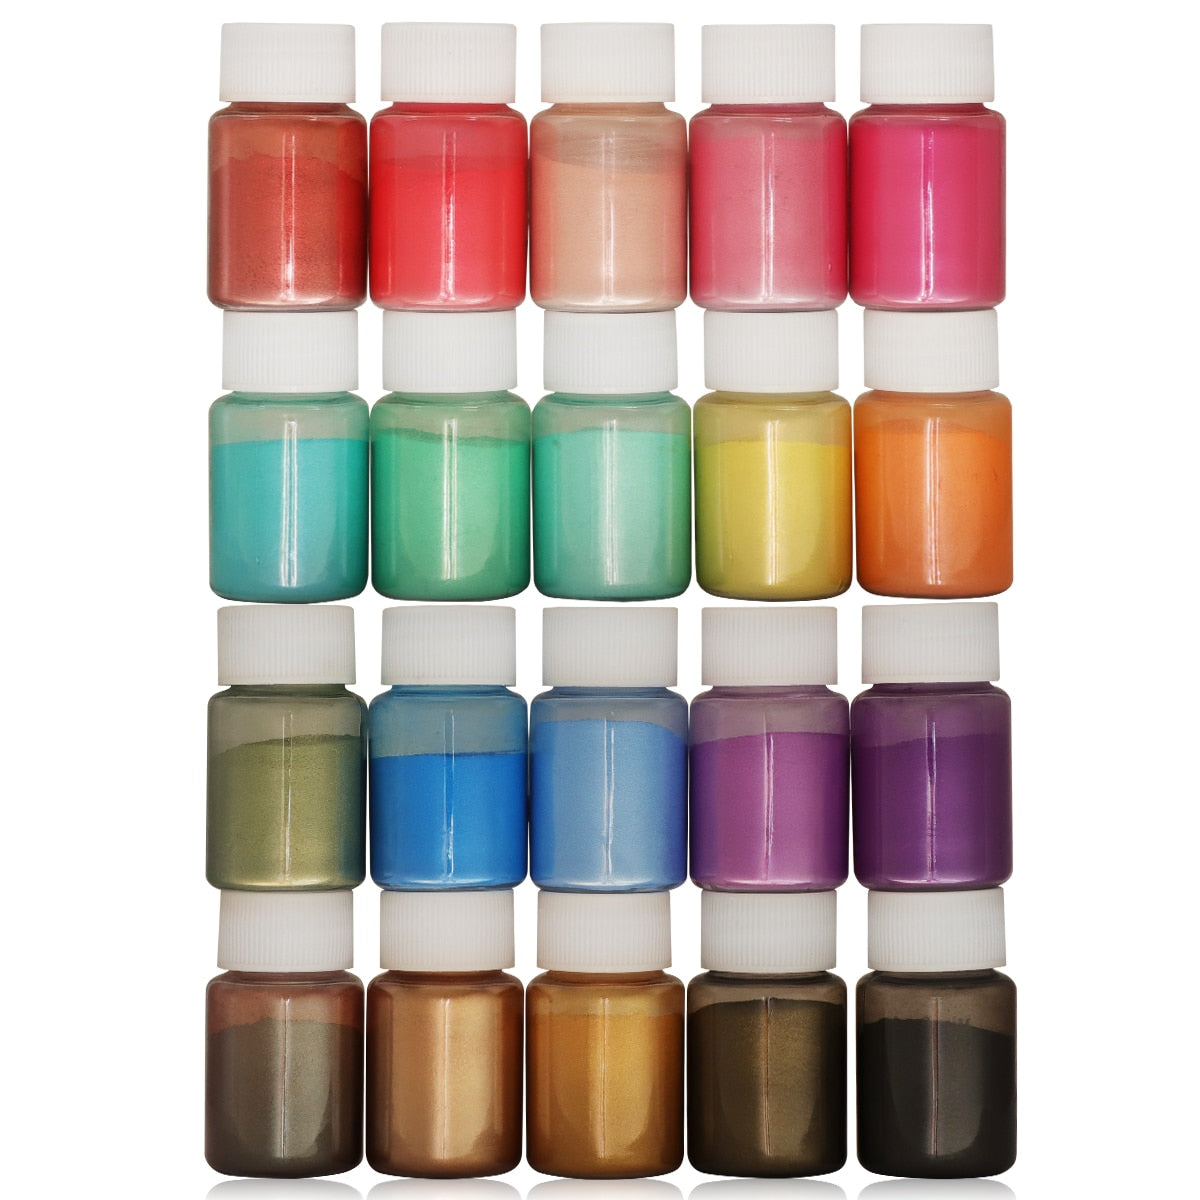 32 Color Mica Powder Resin Filler Pearlescent Powder Coloring DIY Tools Nail Art Decoration - atozdepot23